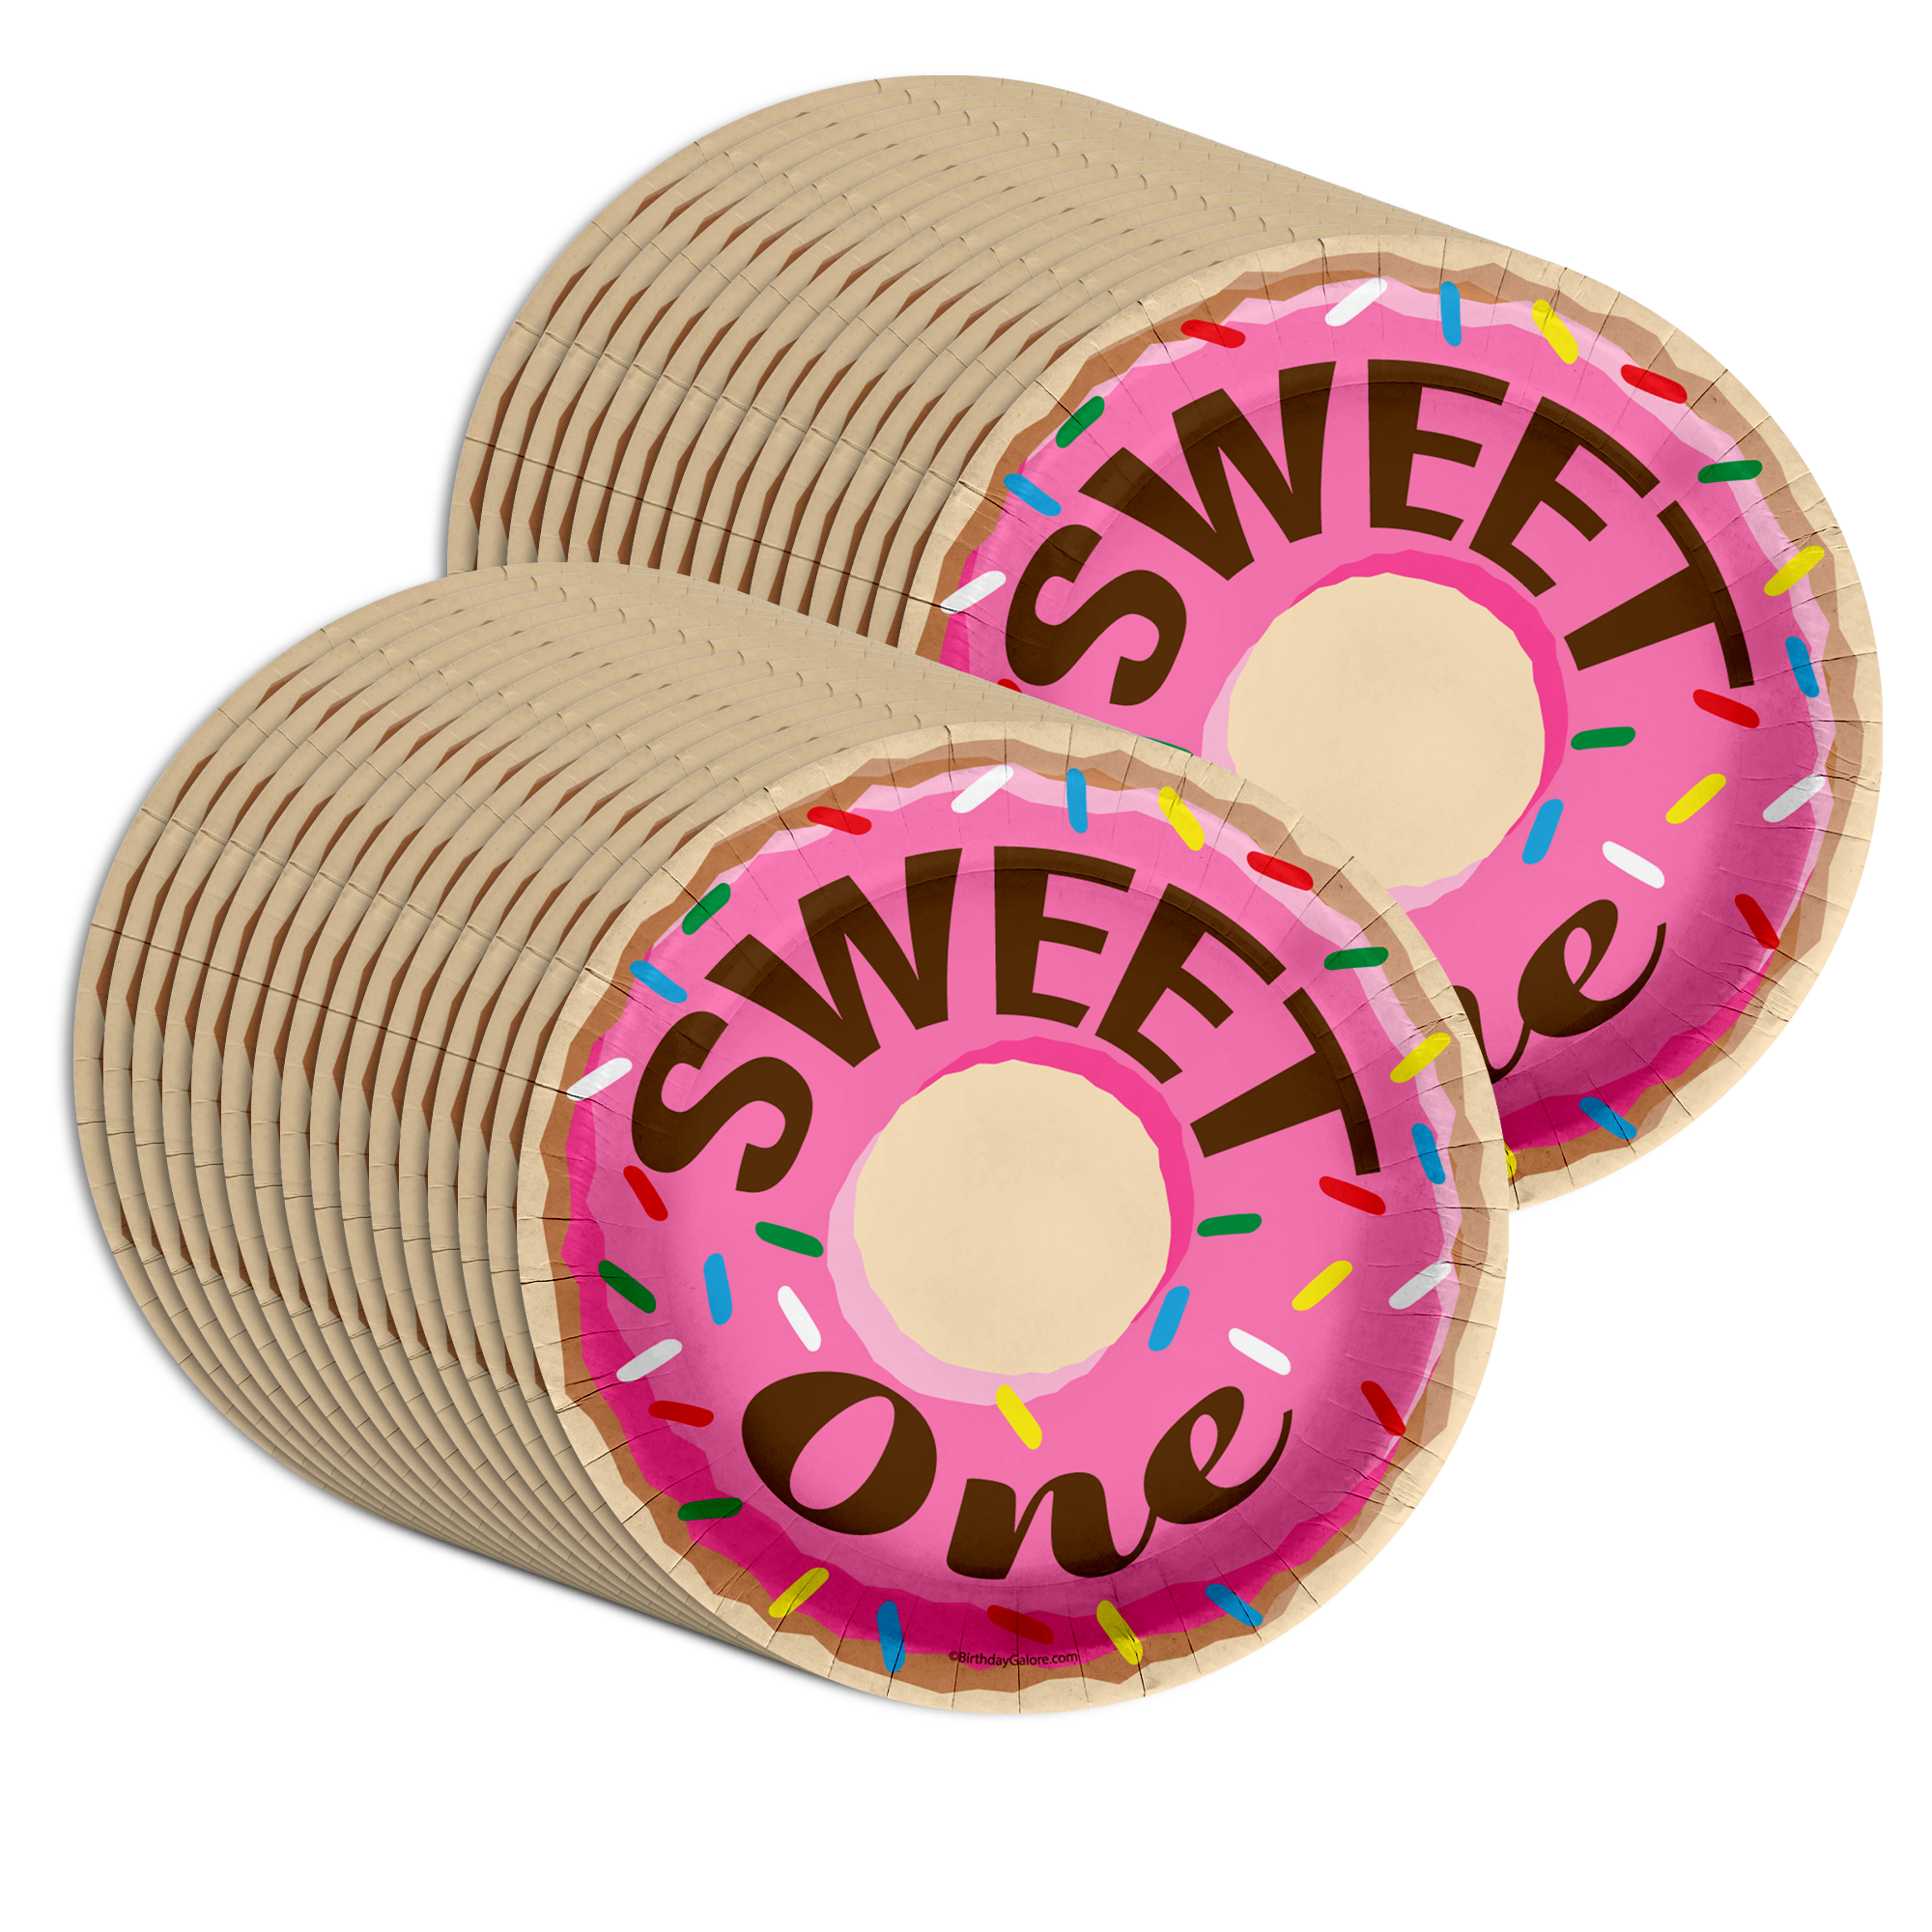 Girls 1st Birthday Party Supplies - Sweet One Donut Birthday Paper Plates - Large 9" Paper Plates in Bulk 32 Piece